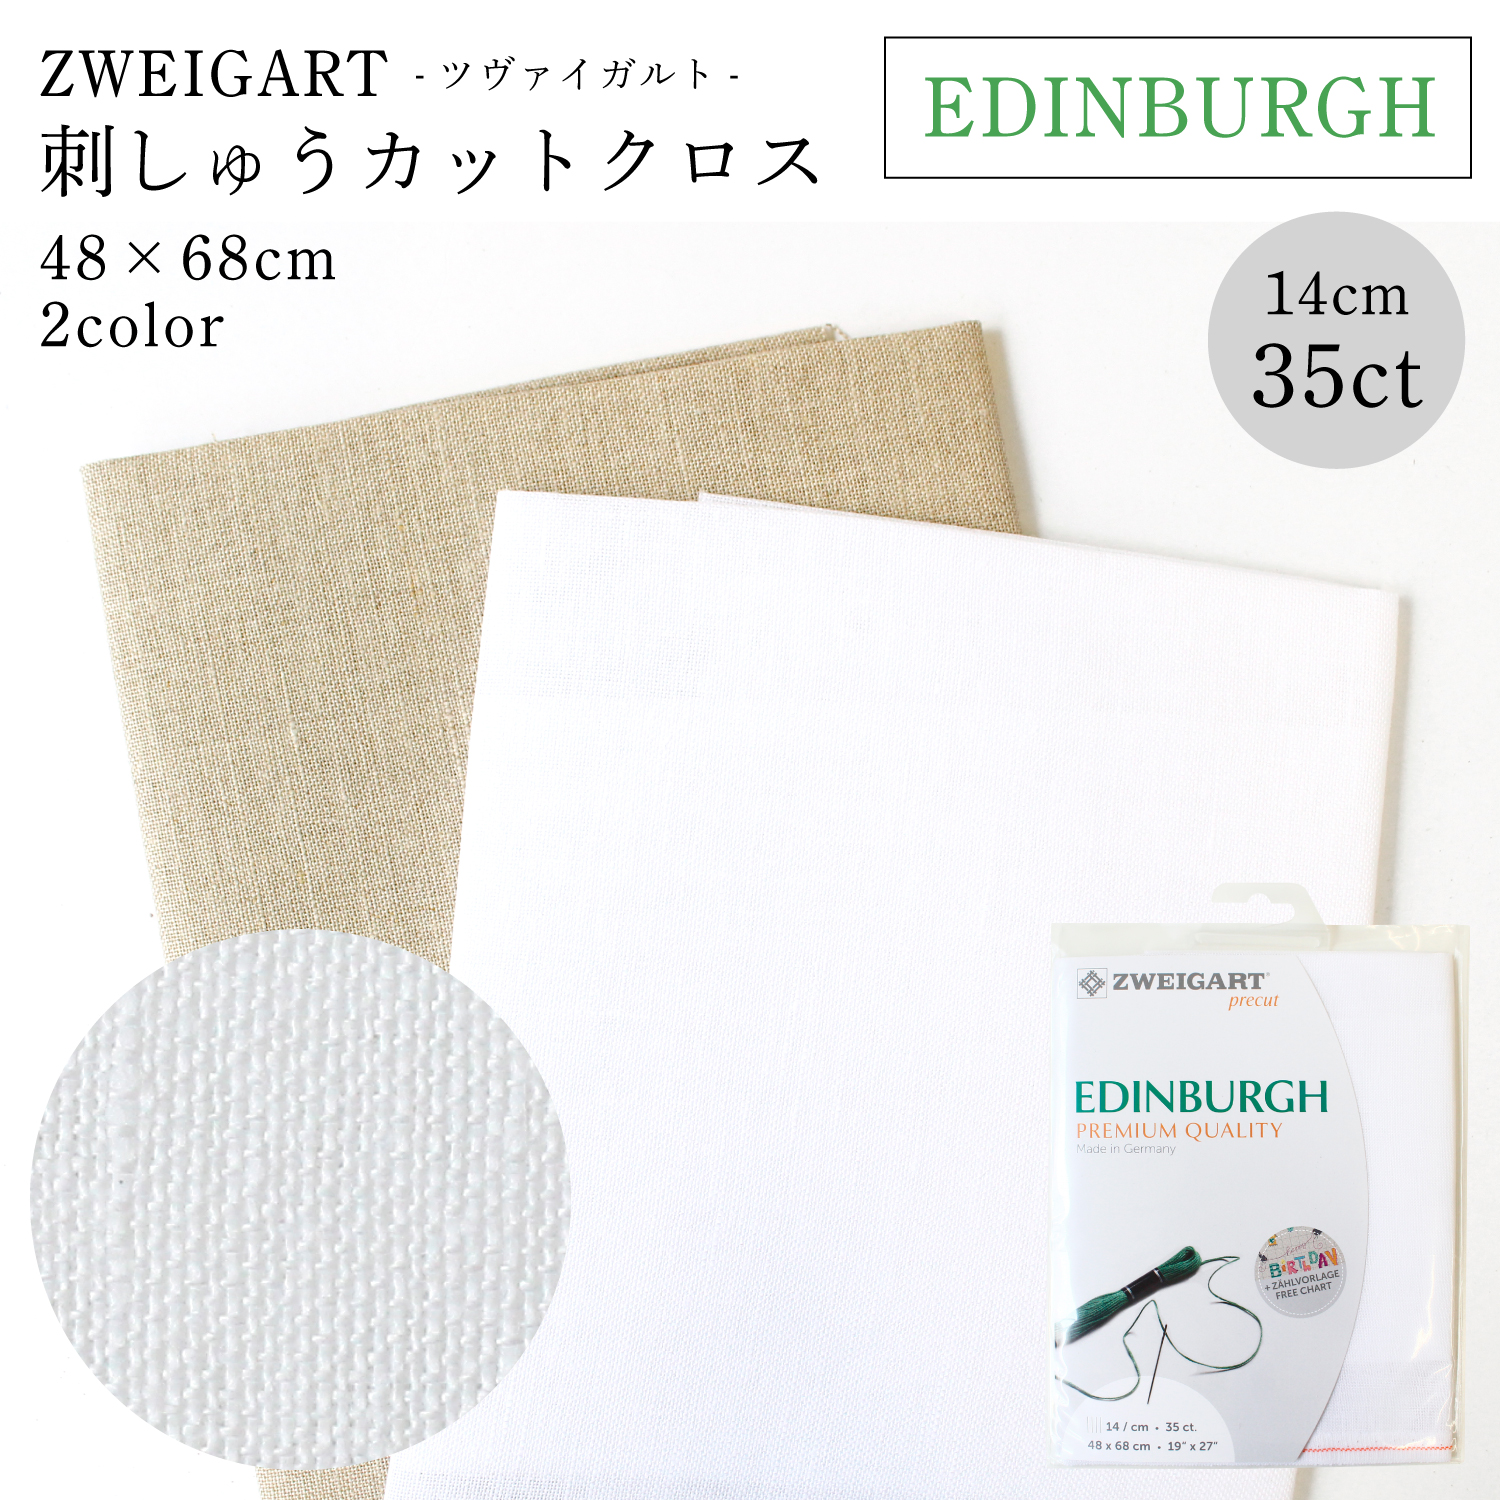 ZW3217P TWEIGART Embroidery Cloth 36CT EDINBURGH 48x68cm (bag)